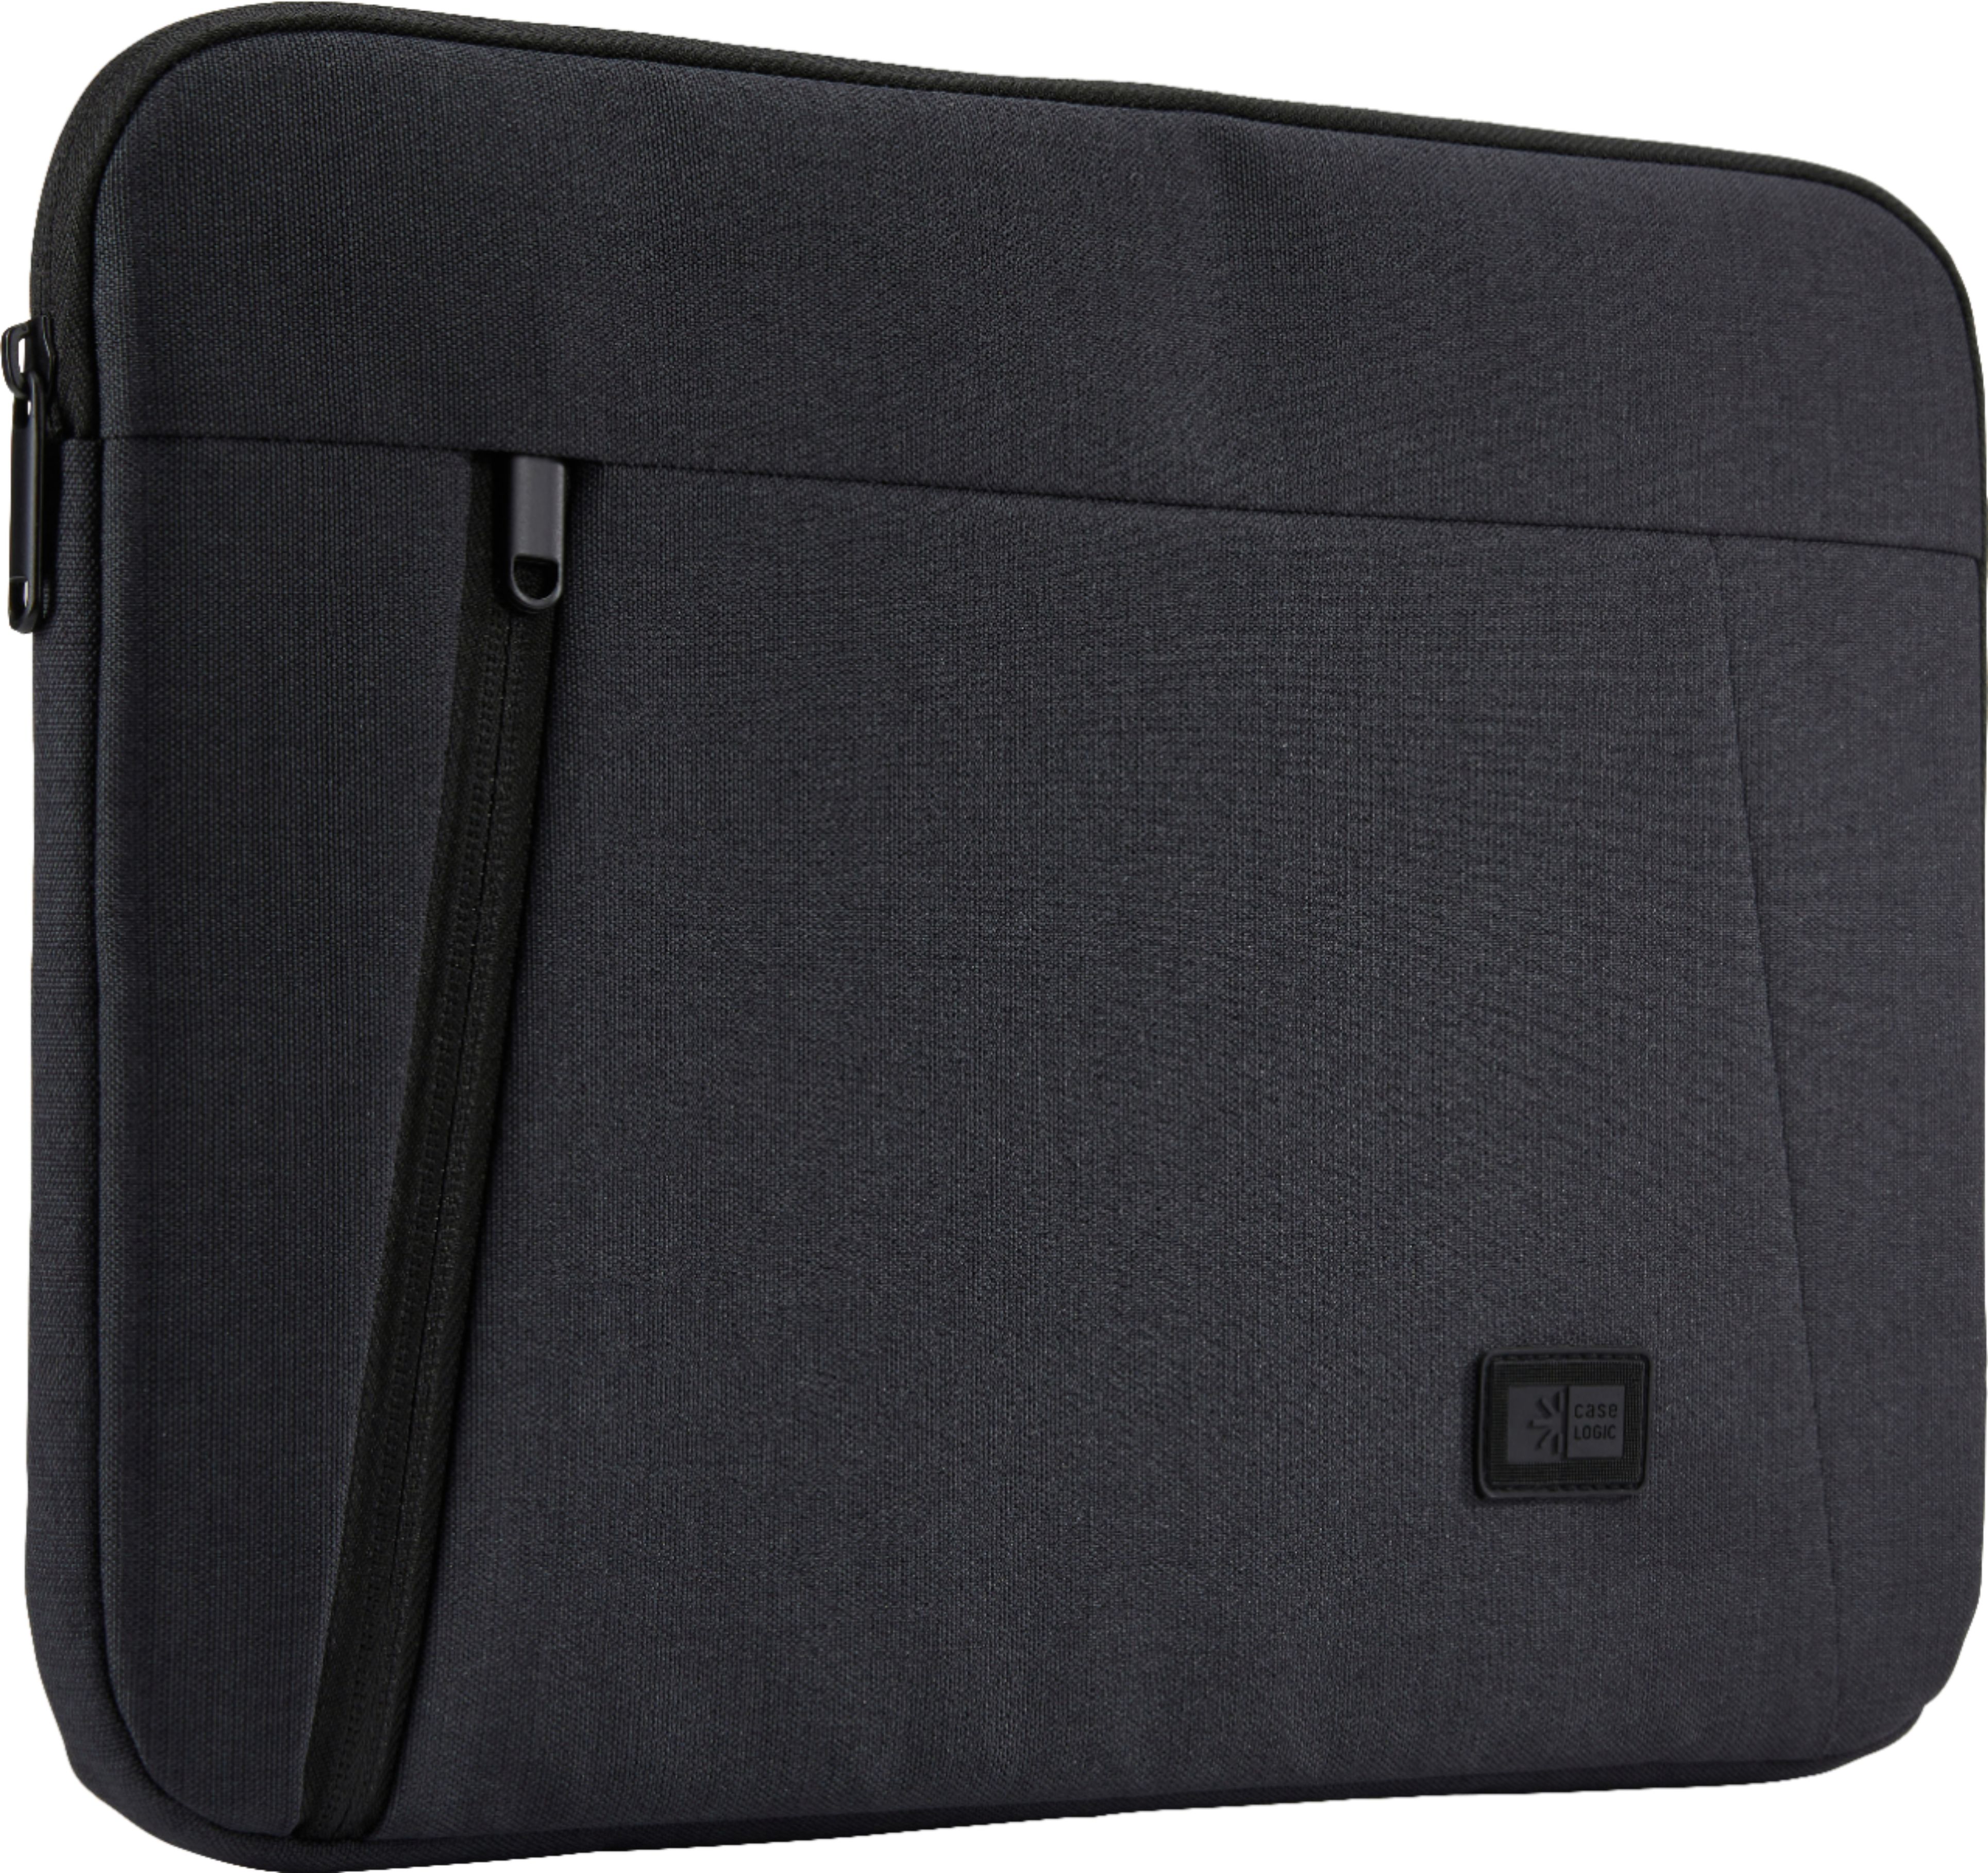 Laptop & Tablet Cases